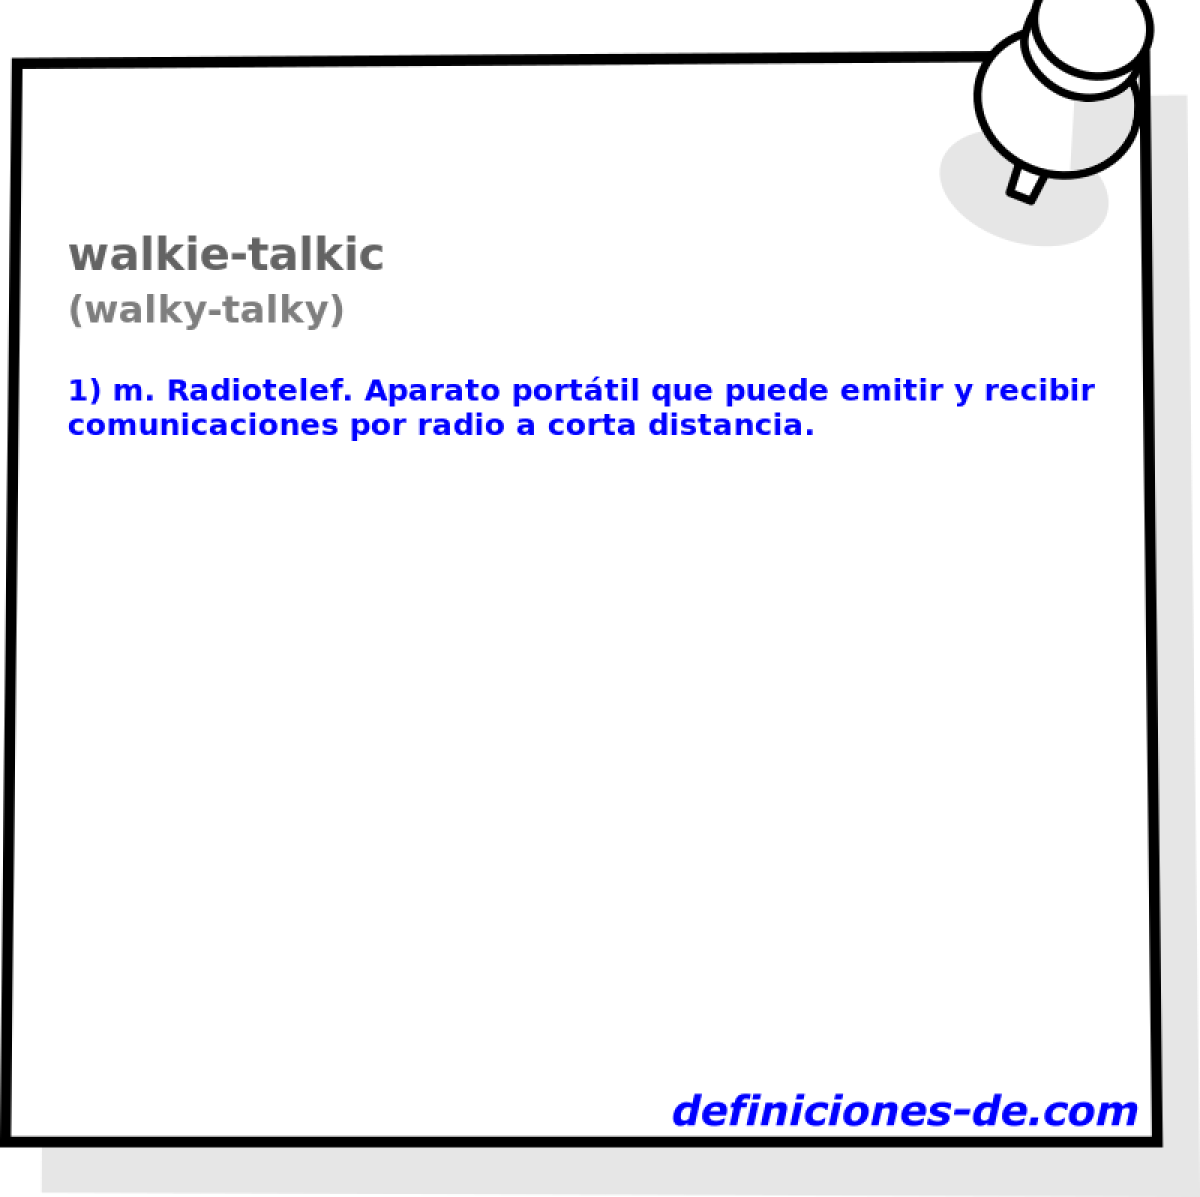 walkie-talkic (walky-talky)